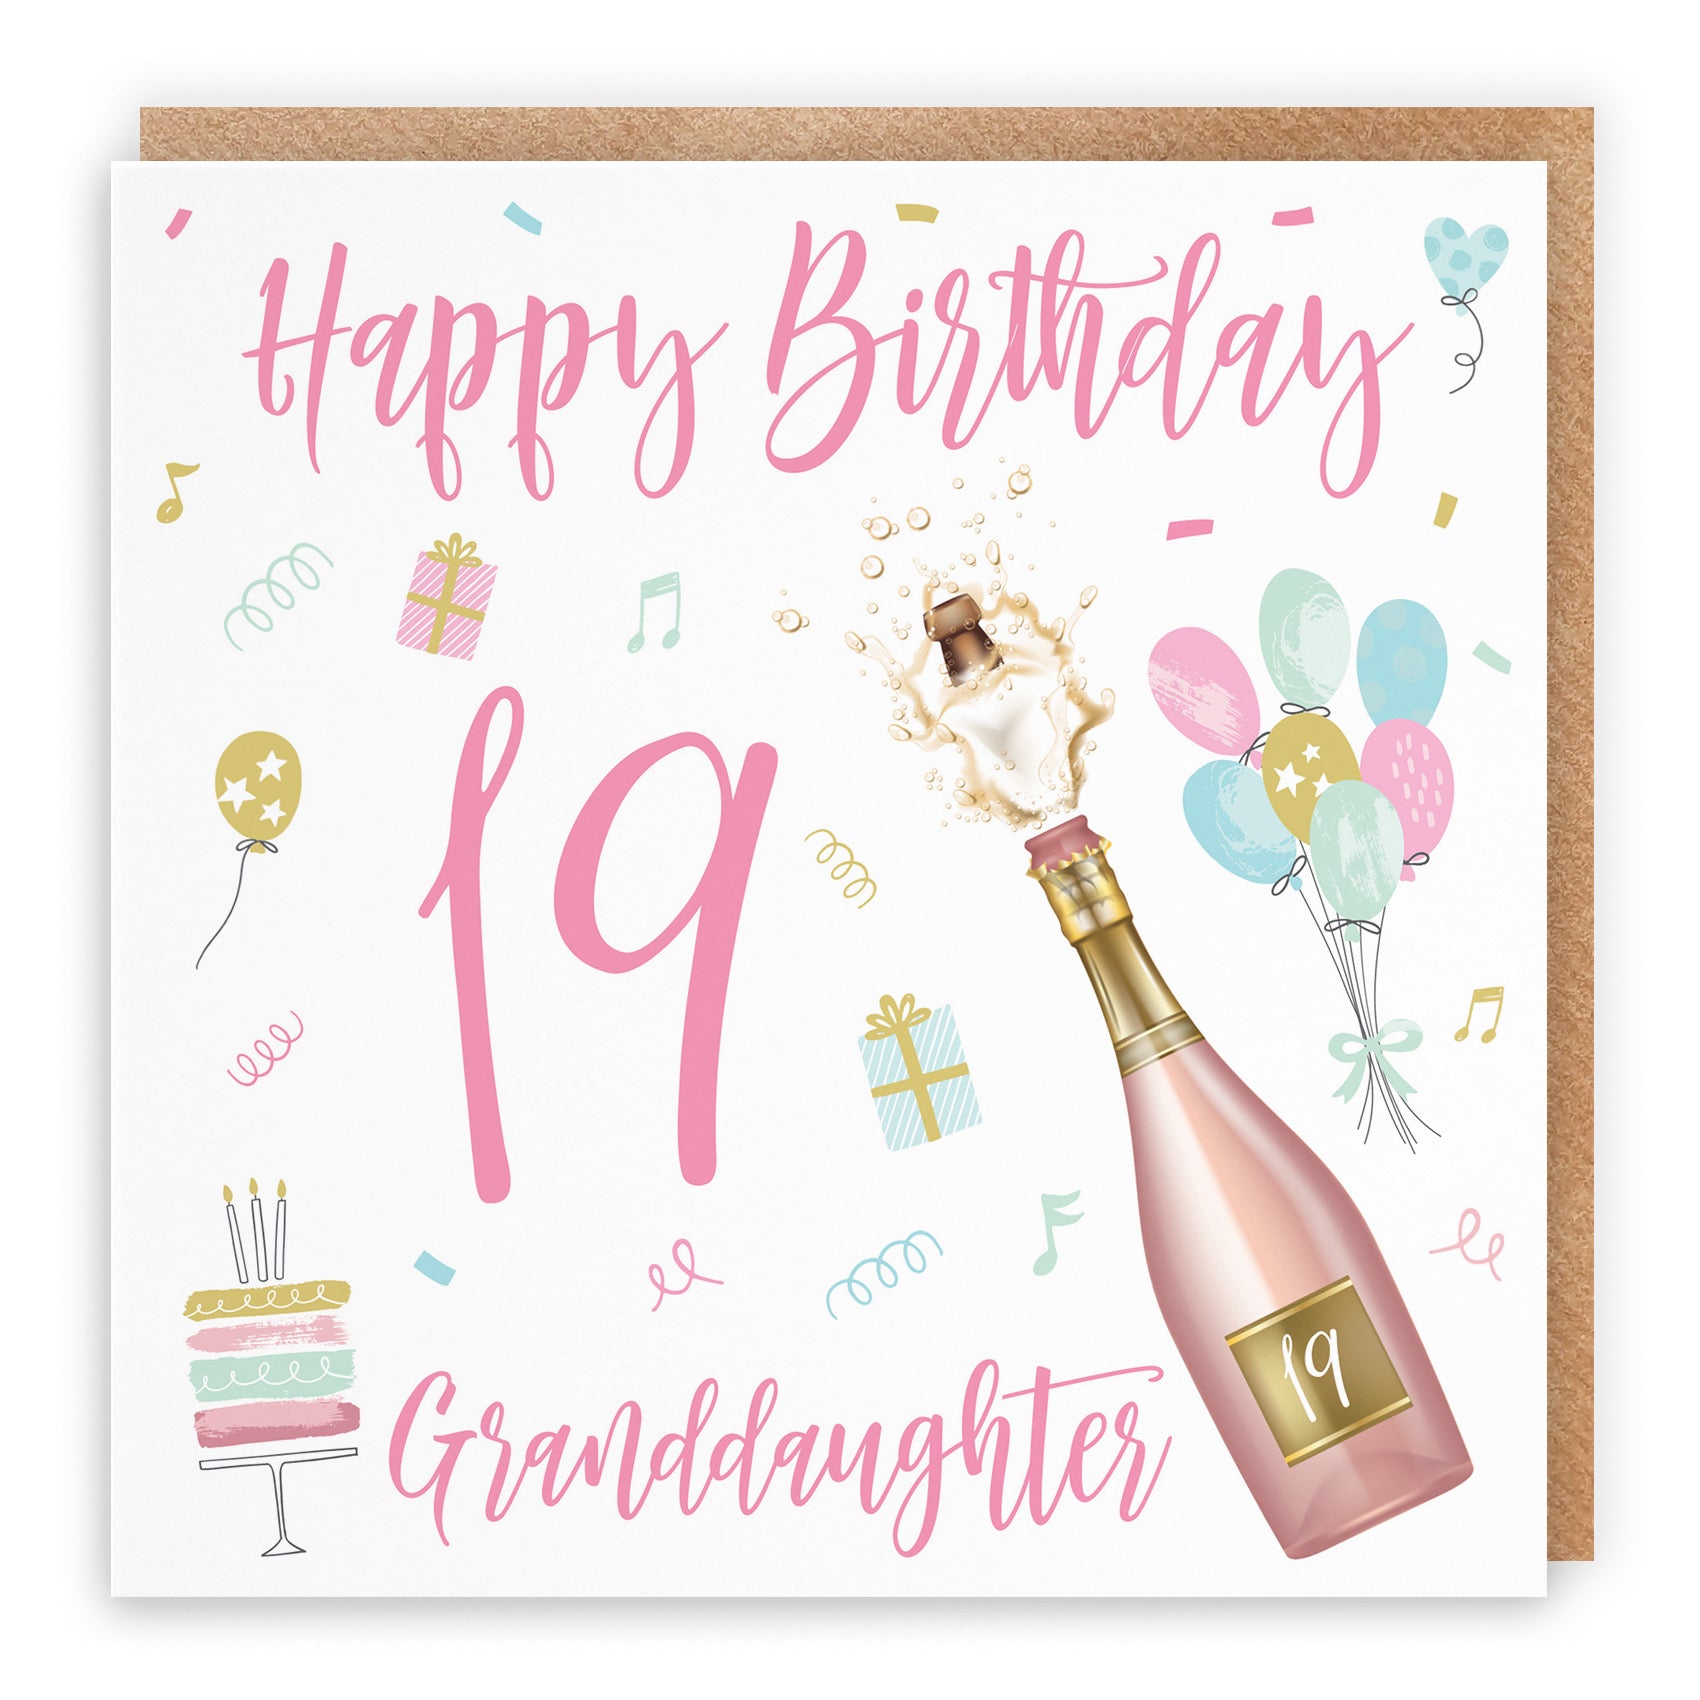 19th Granddaughter Birthday Card Champagne - Default Title (B09GLDKK3T)